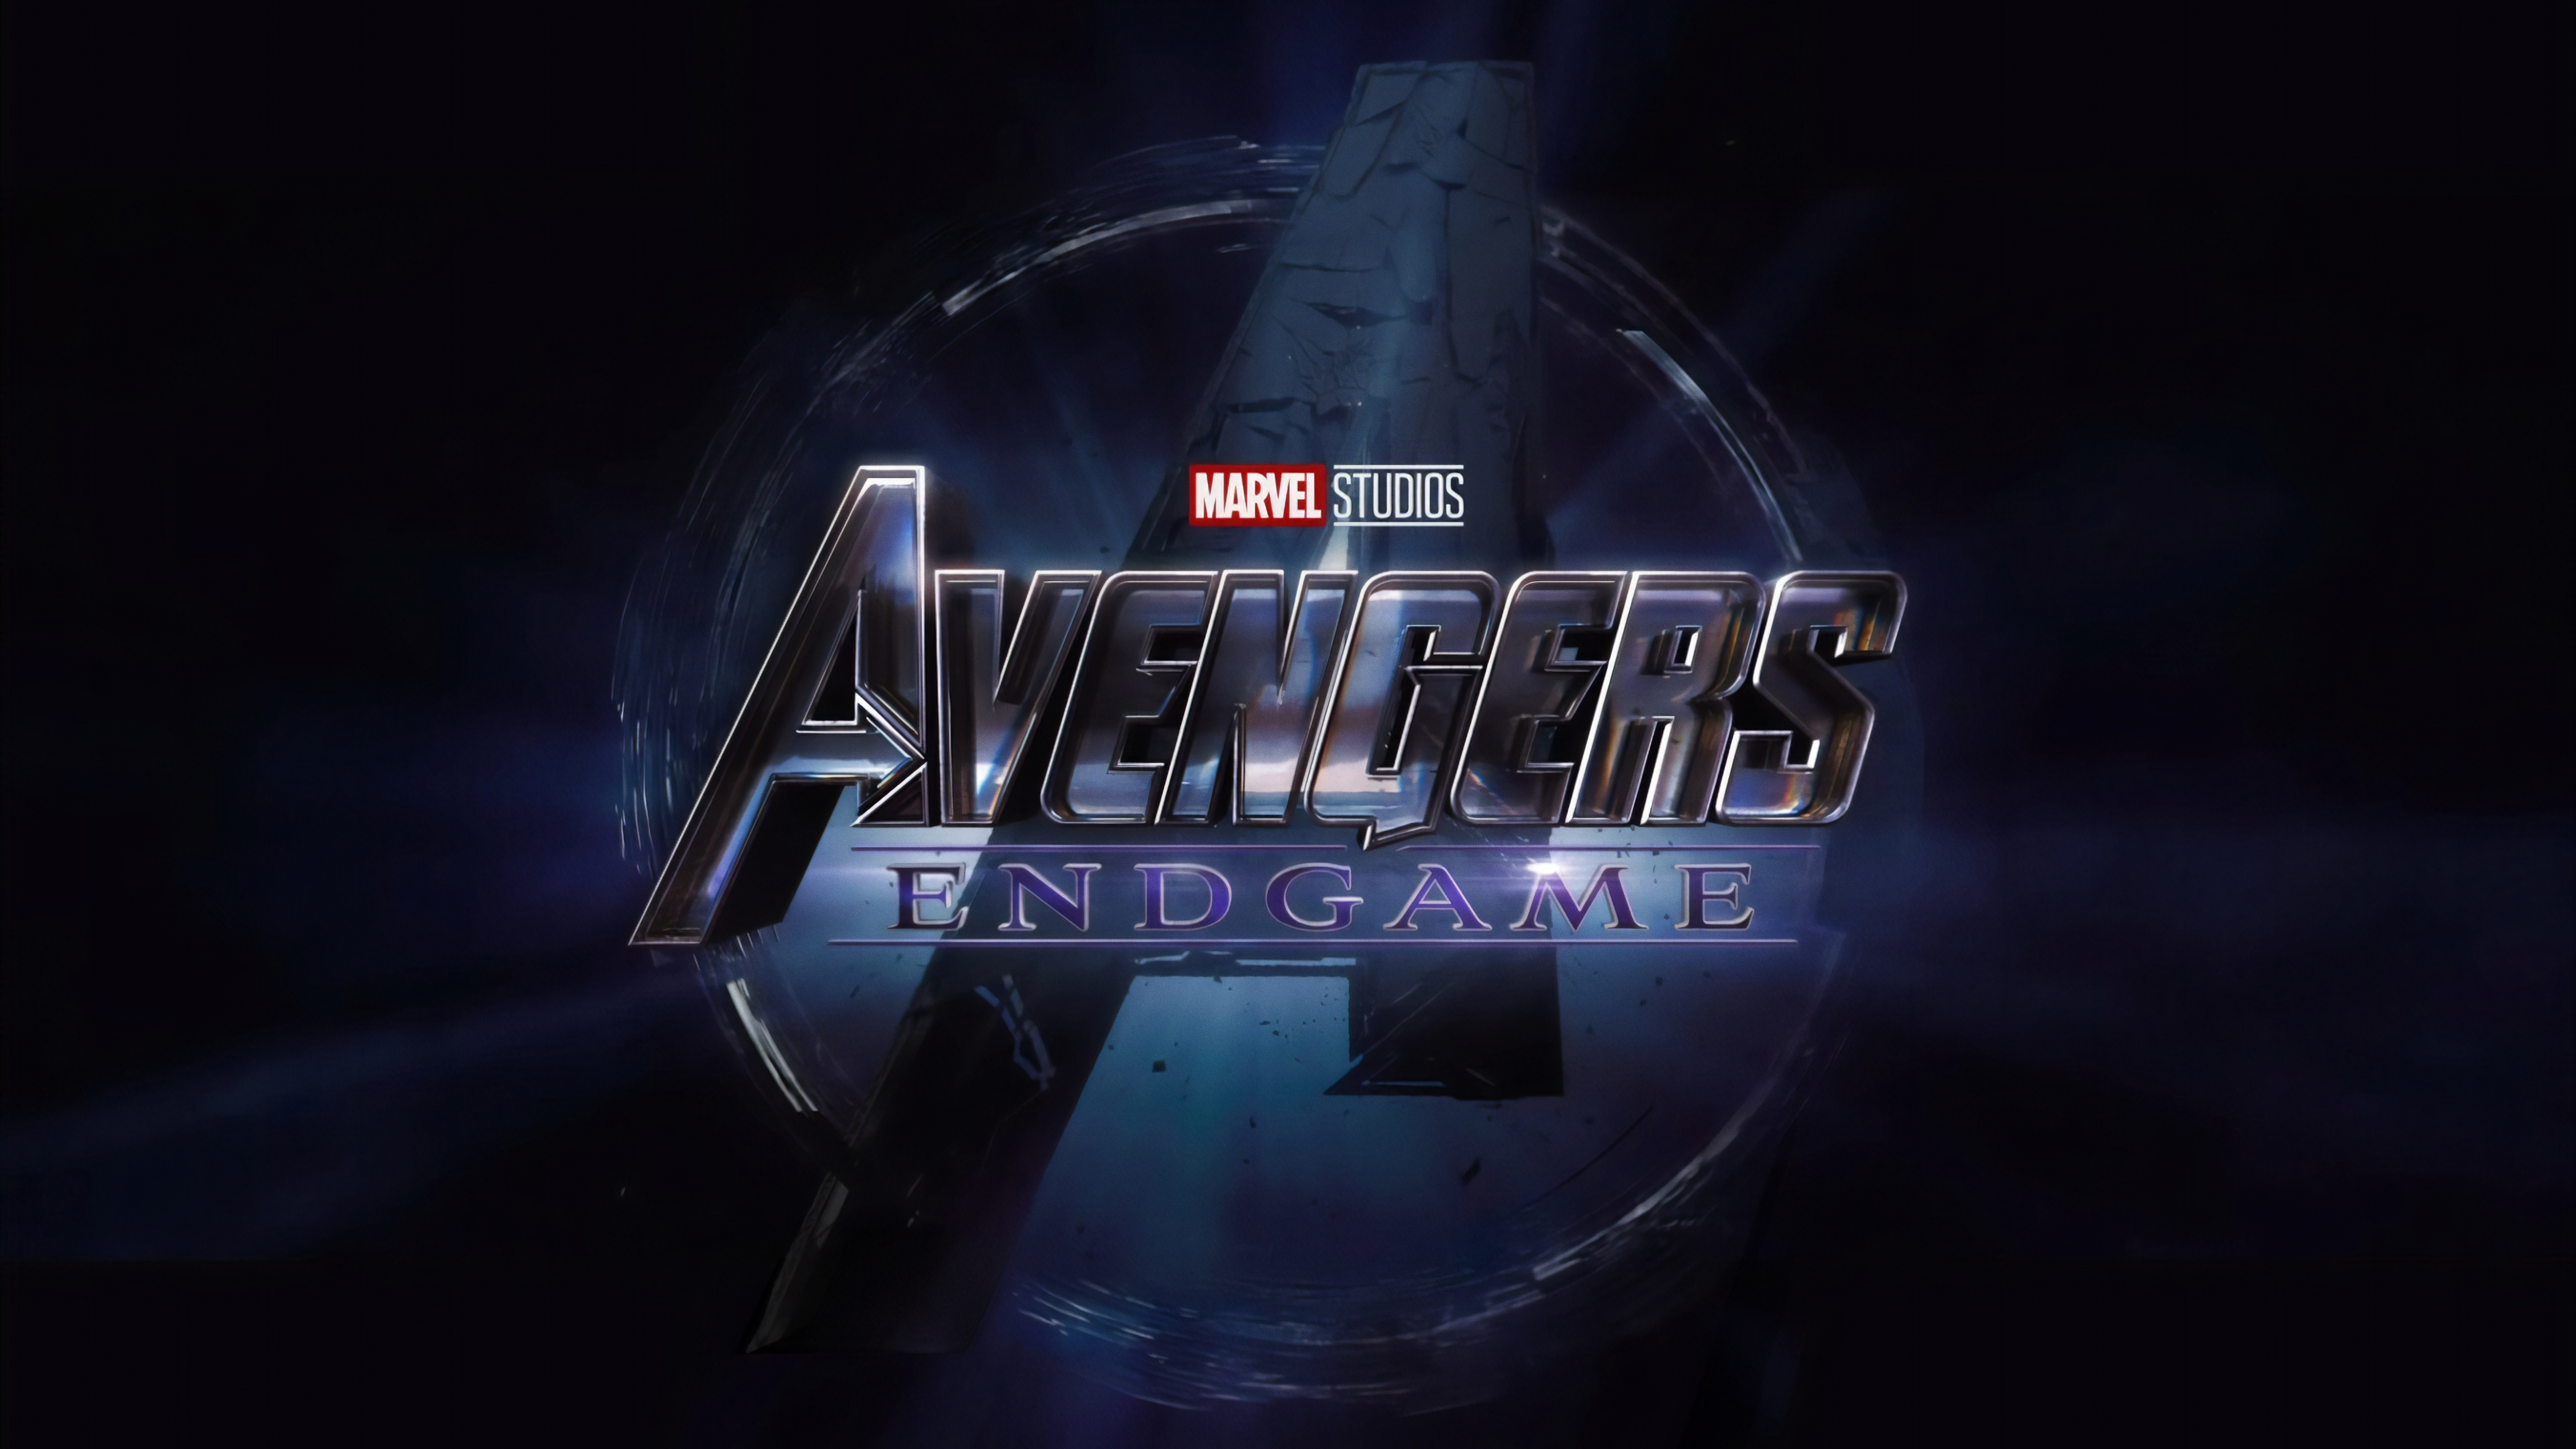 Fondos de pantalla Avengers Endgame Marvel Studios